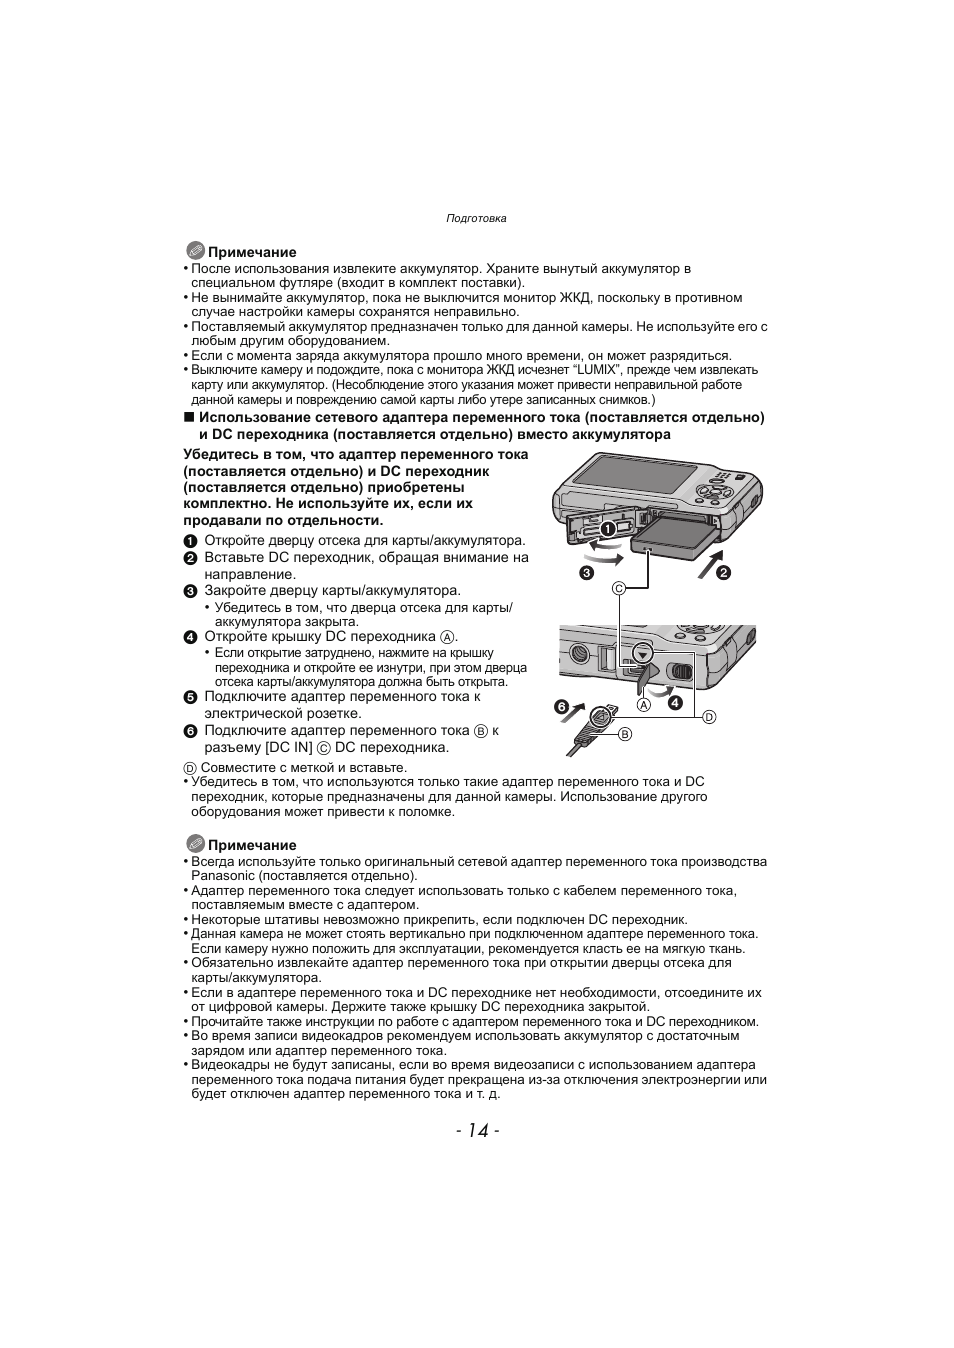 P14) | Инструкция по эксплуатации Panasonic KX-MC6020 | Страница 14 / 130